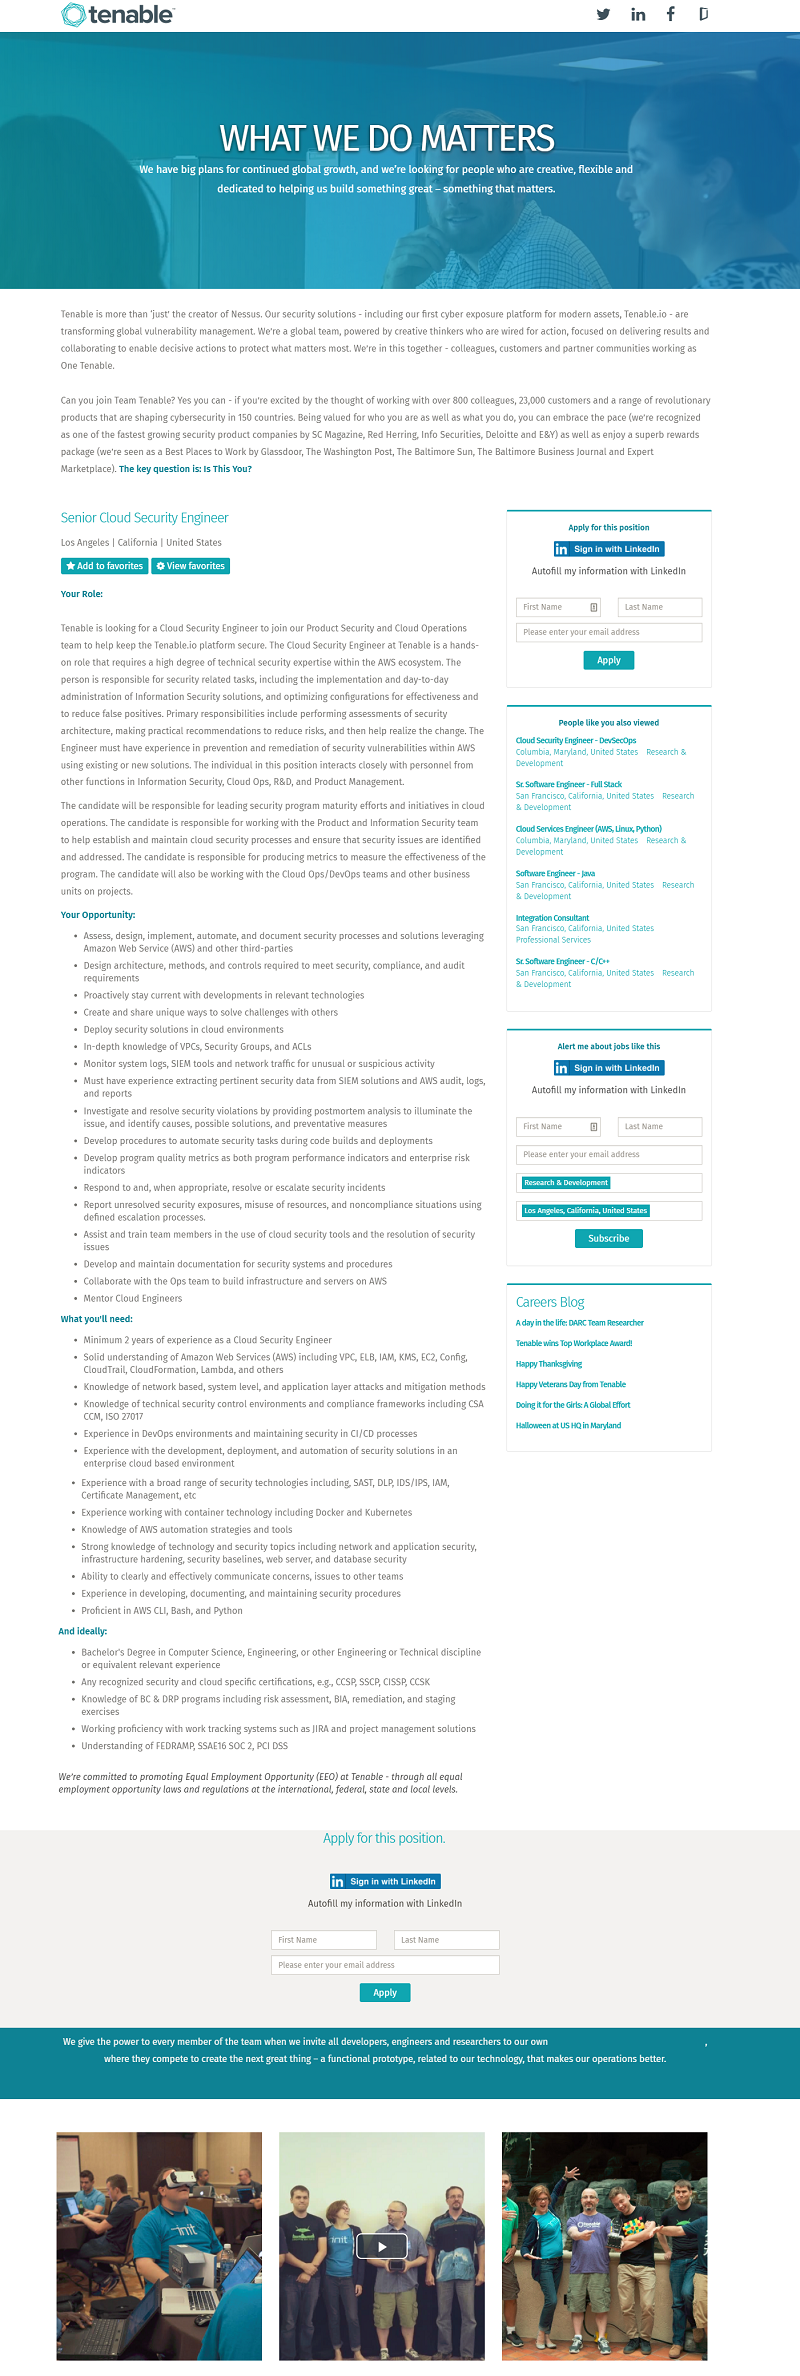 Tenable Mini Career Site Job Description